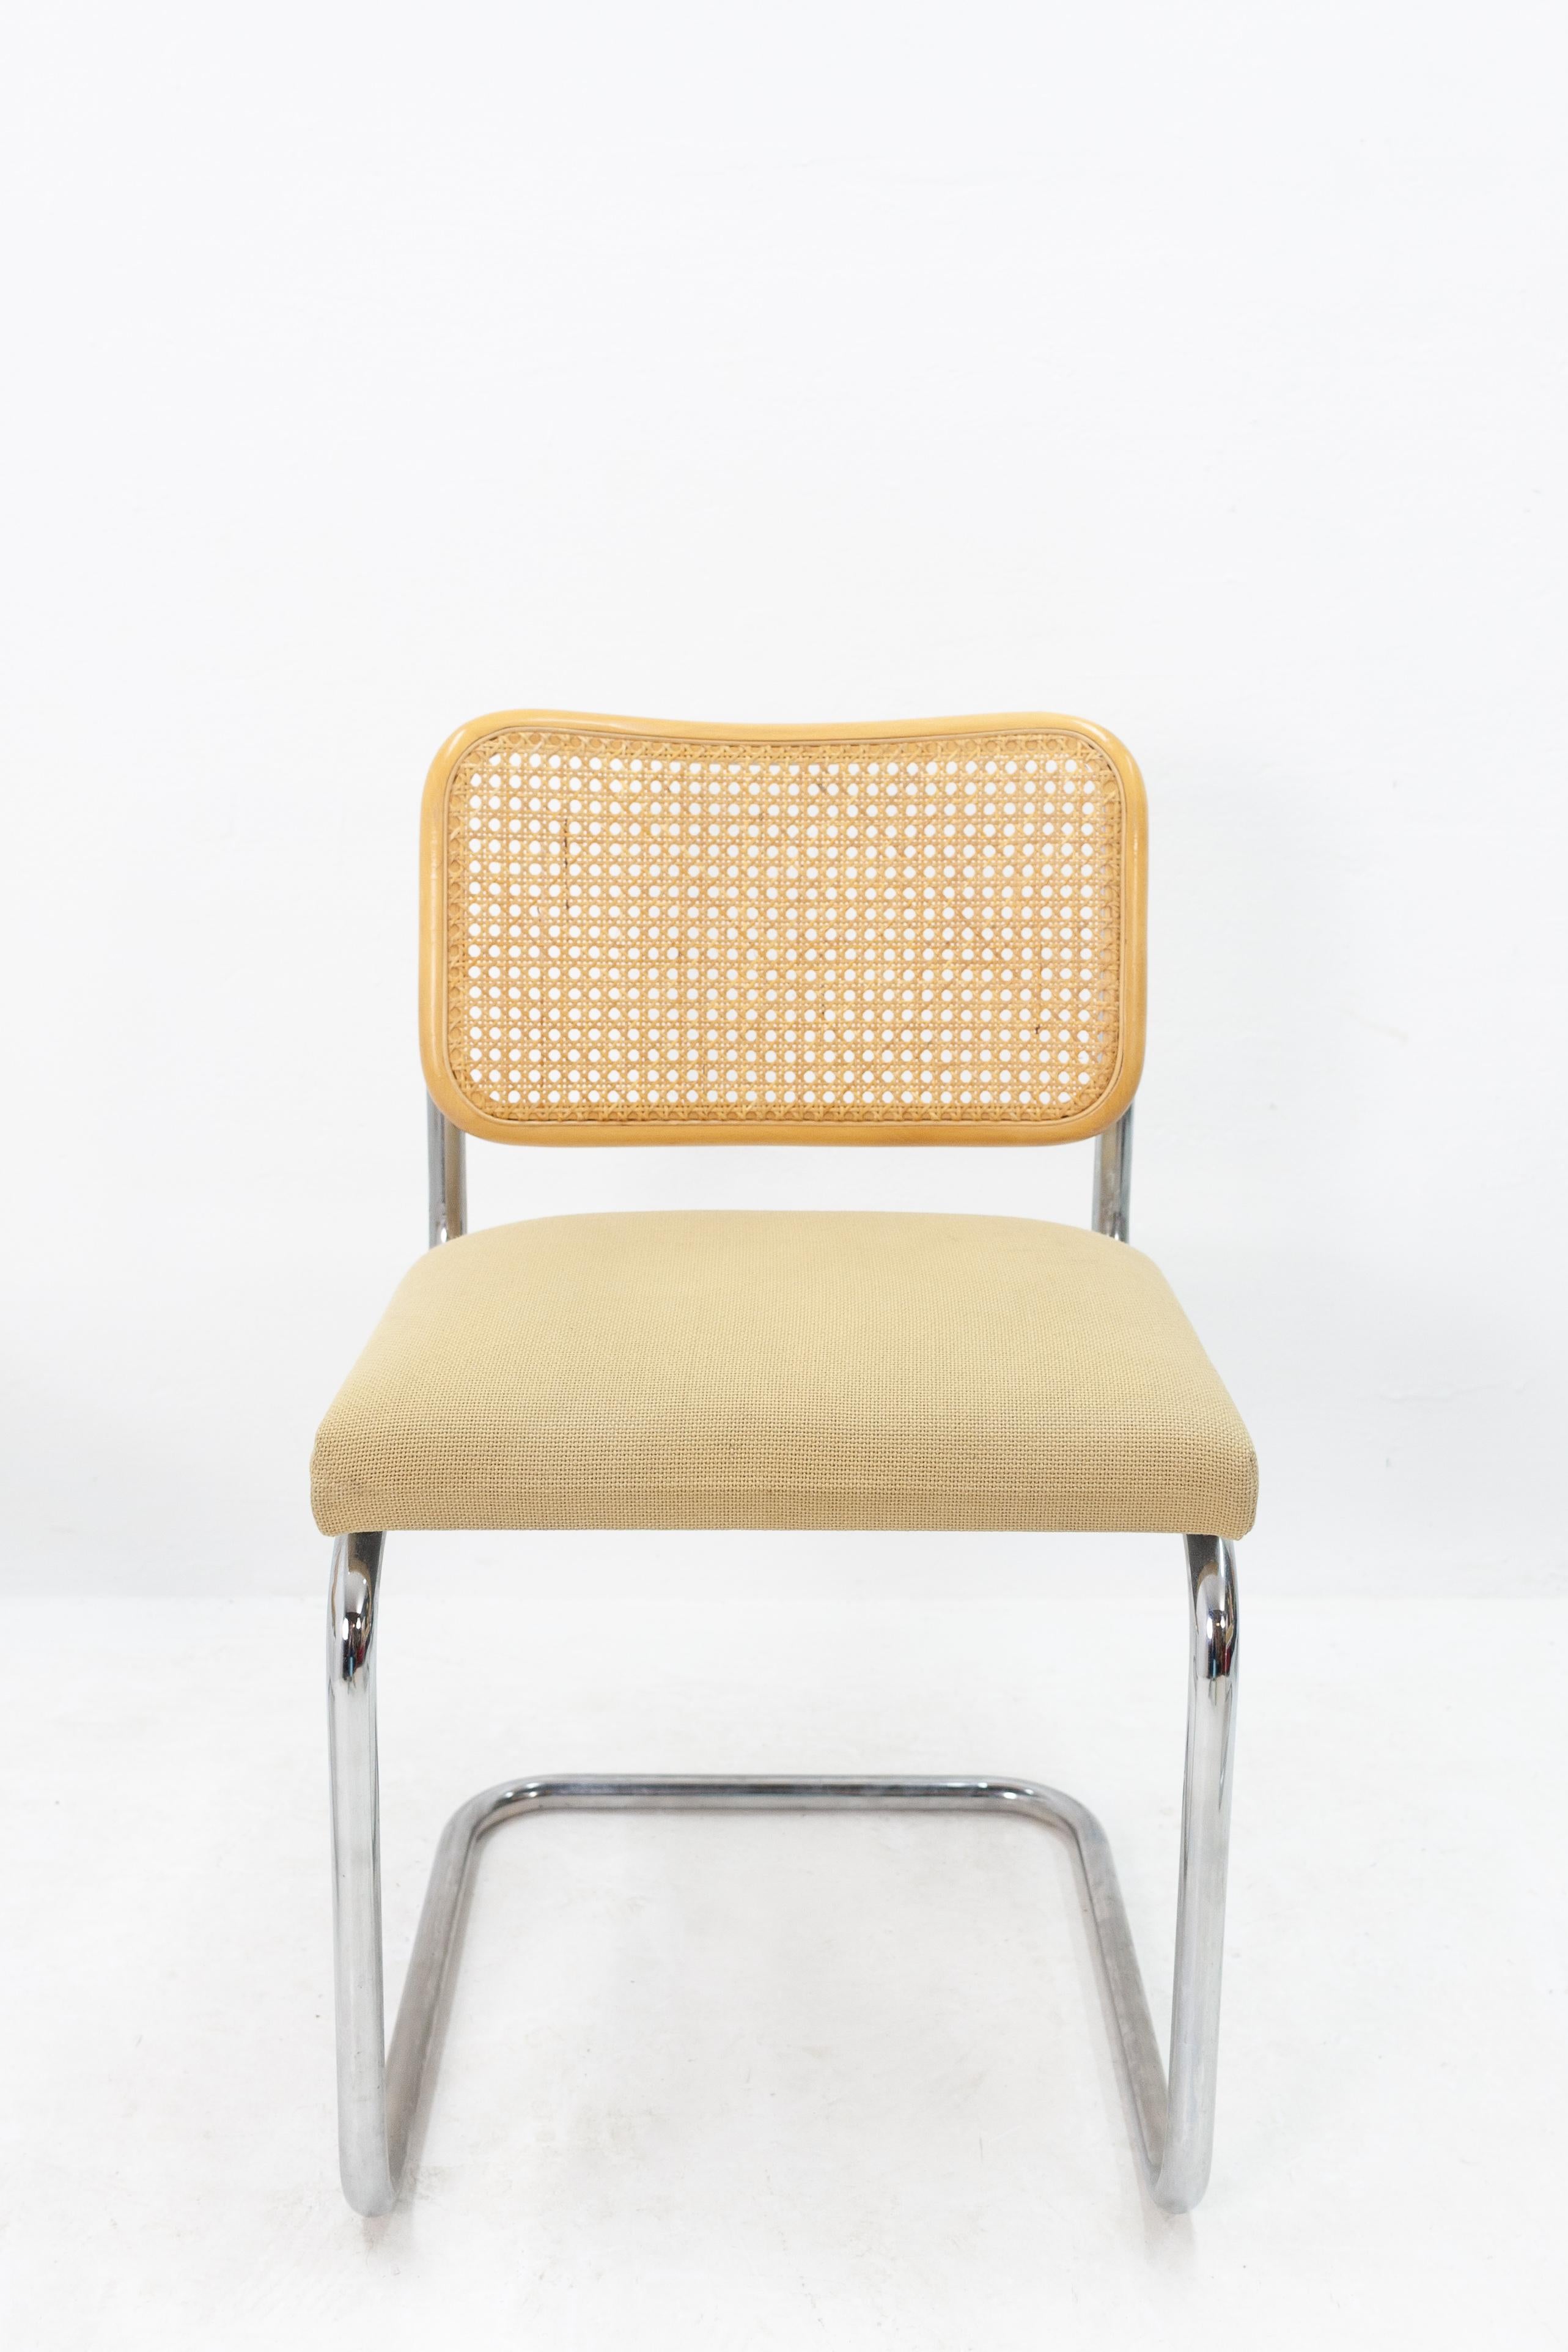 Bauhaus 4 Marcel Breuer Cesca B32 Cantilever Chairs